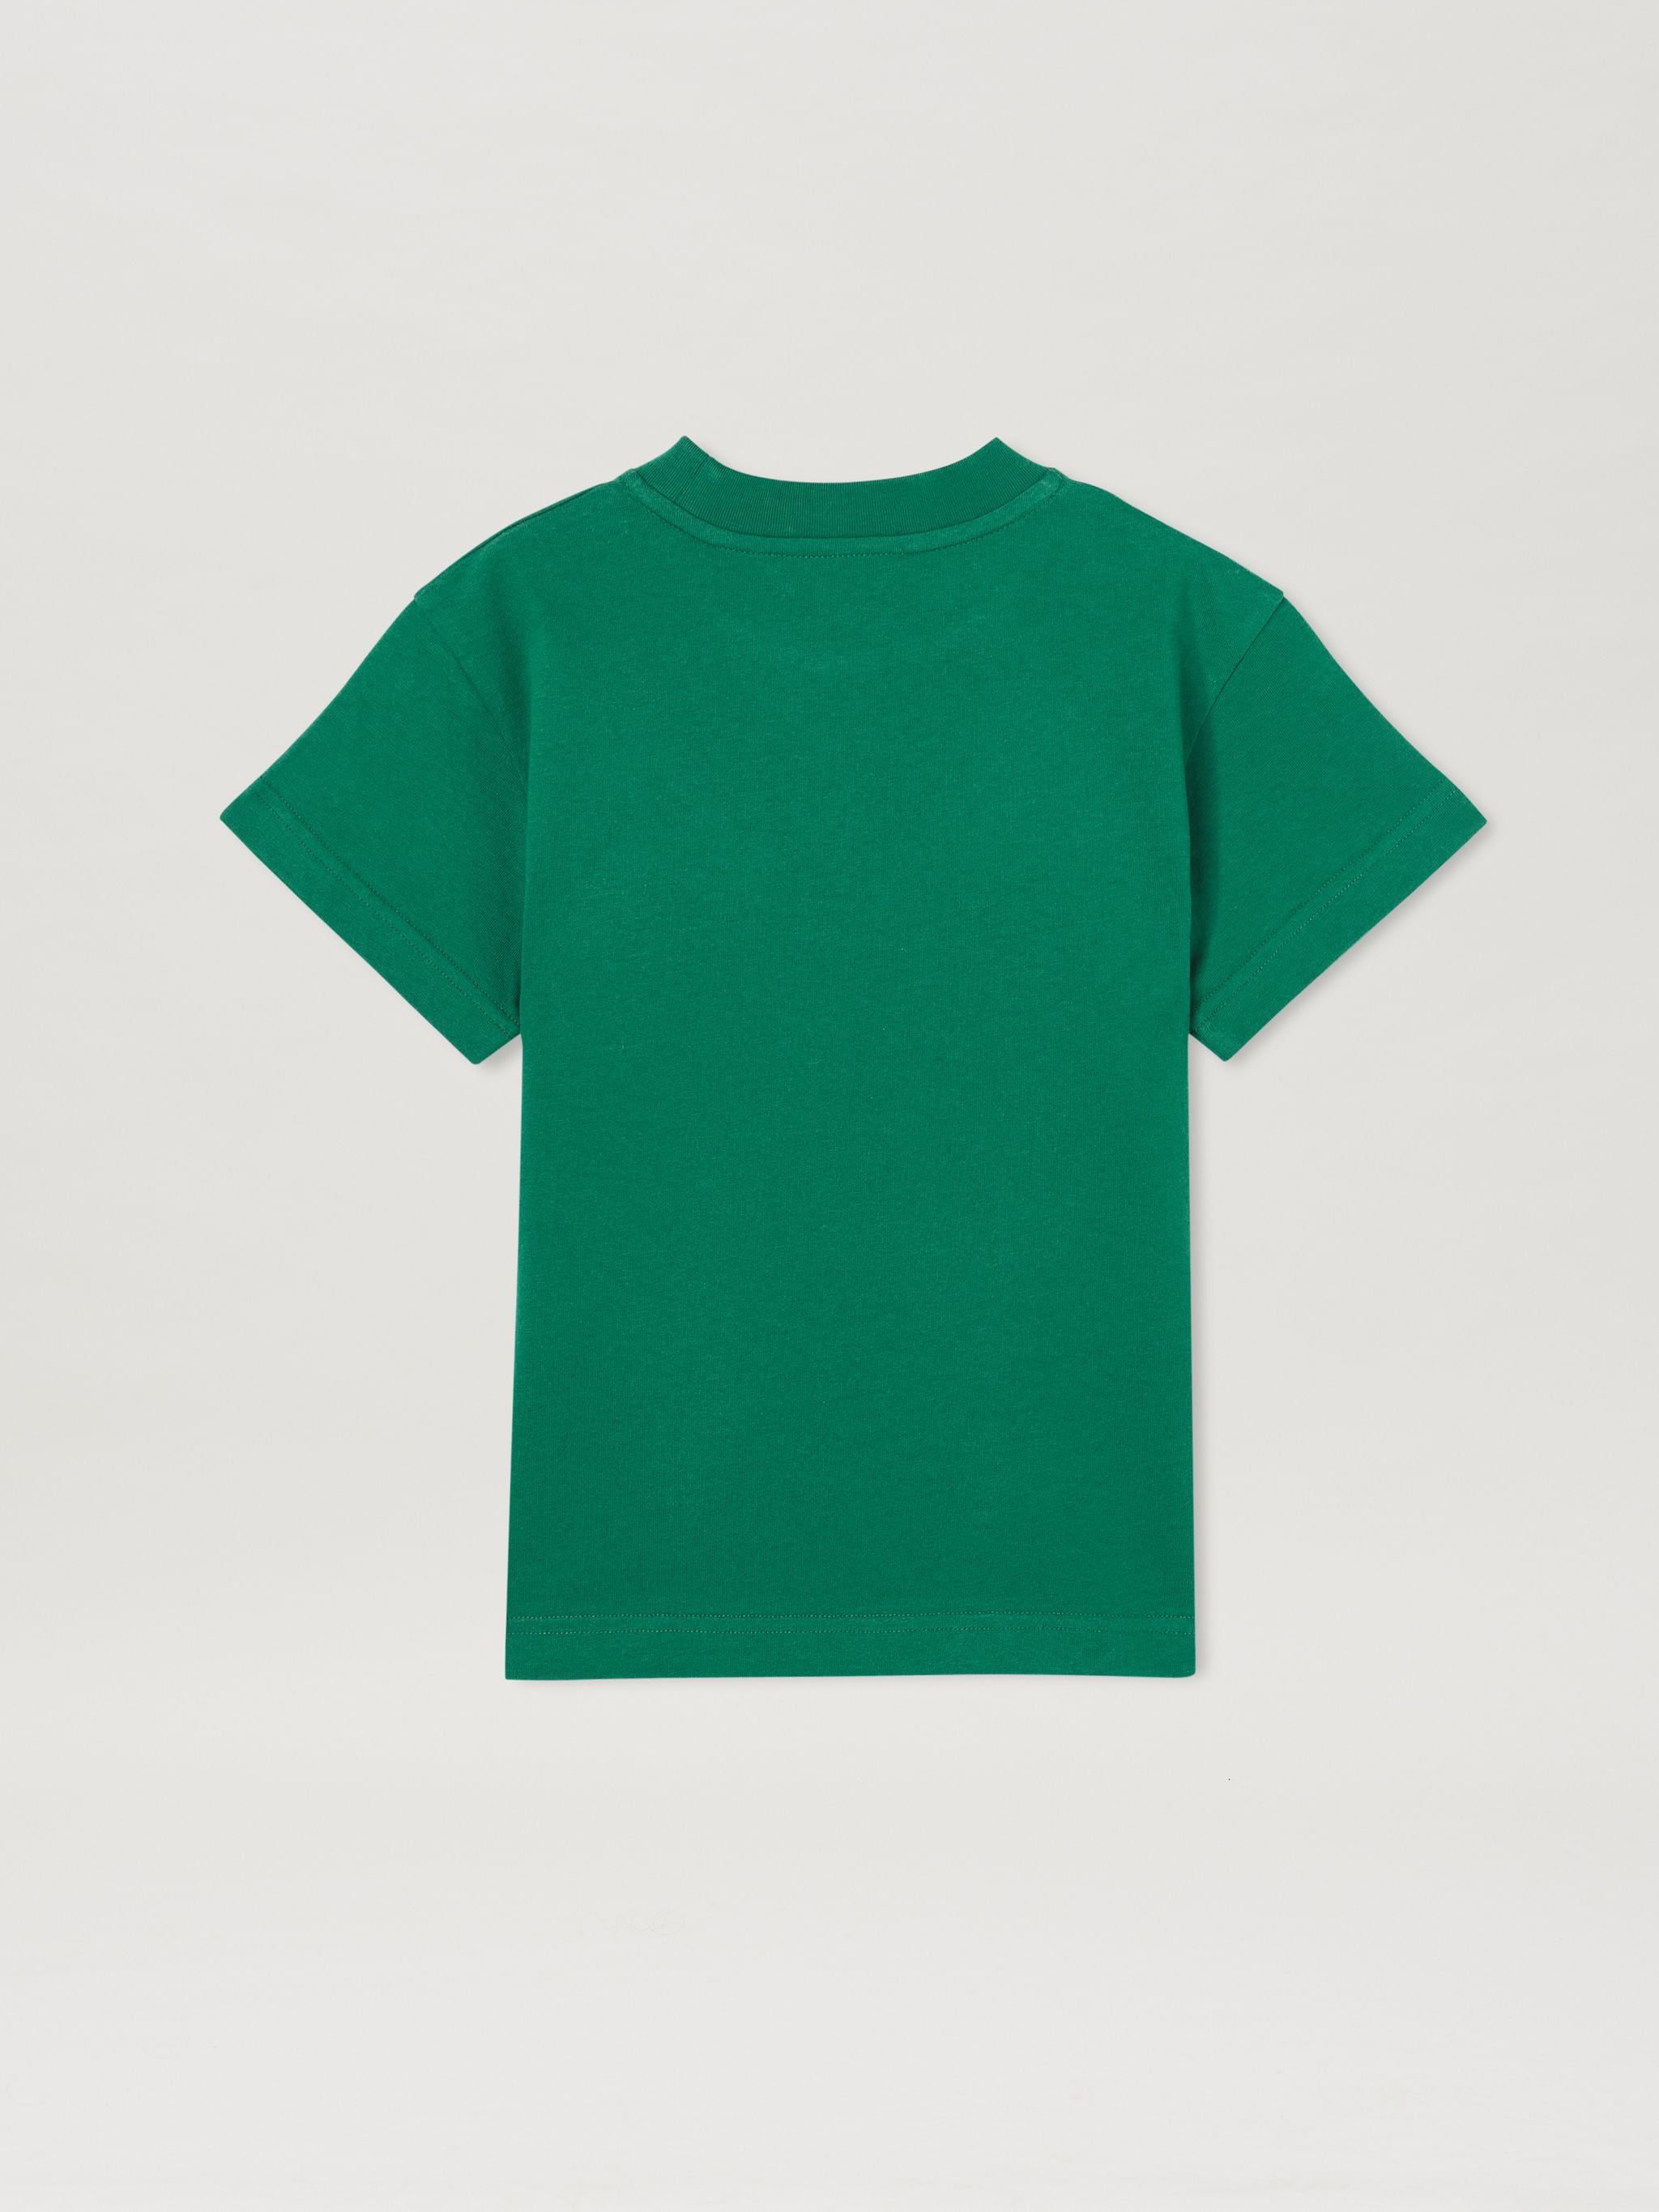 PALM ANGELS t-shirt BEAR Green for boys